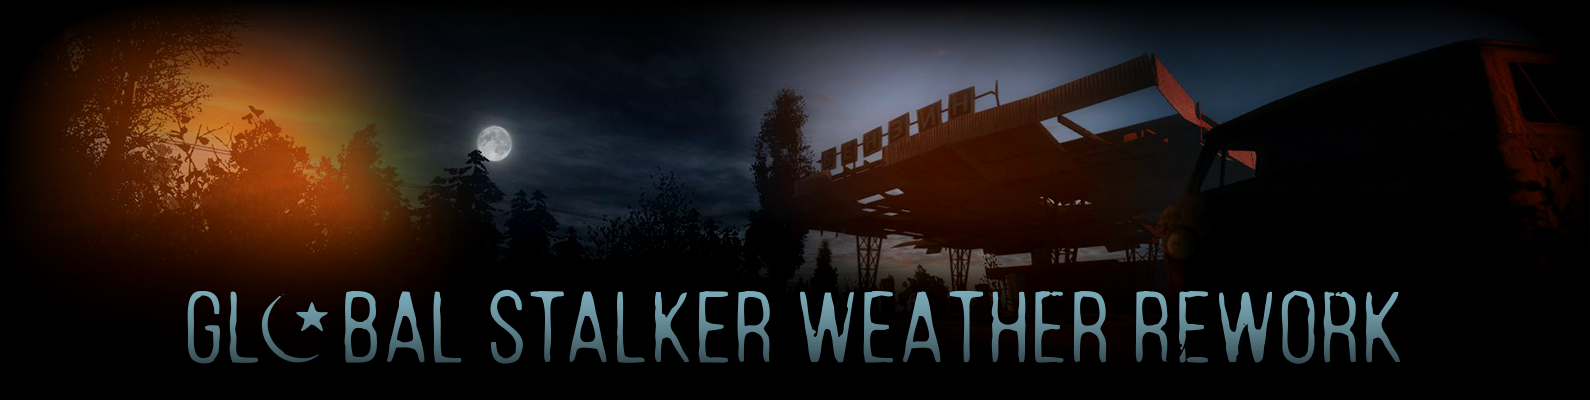 Global Stalker Weather Rework (2021) PC постер